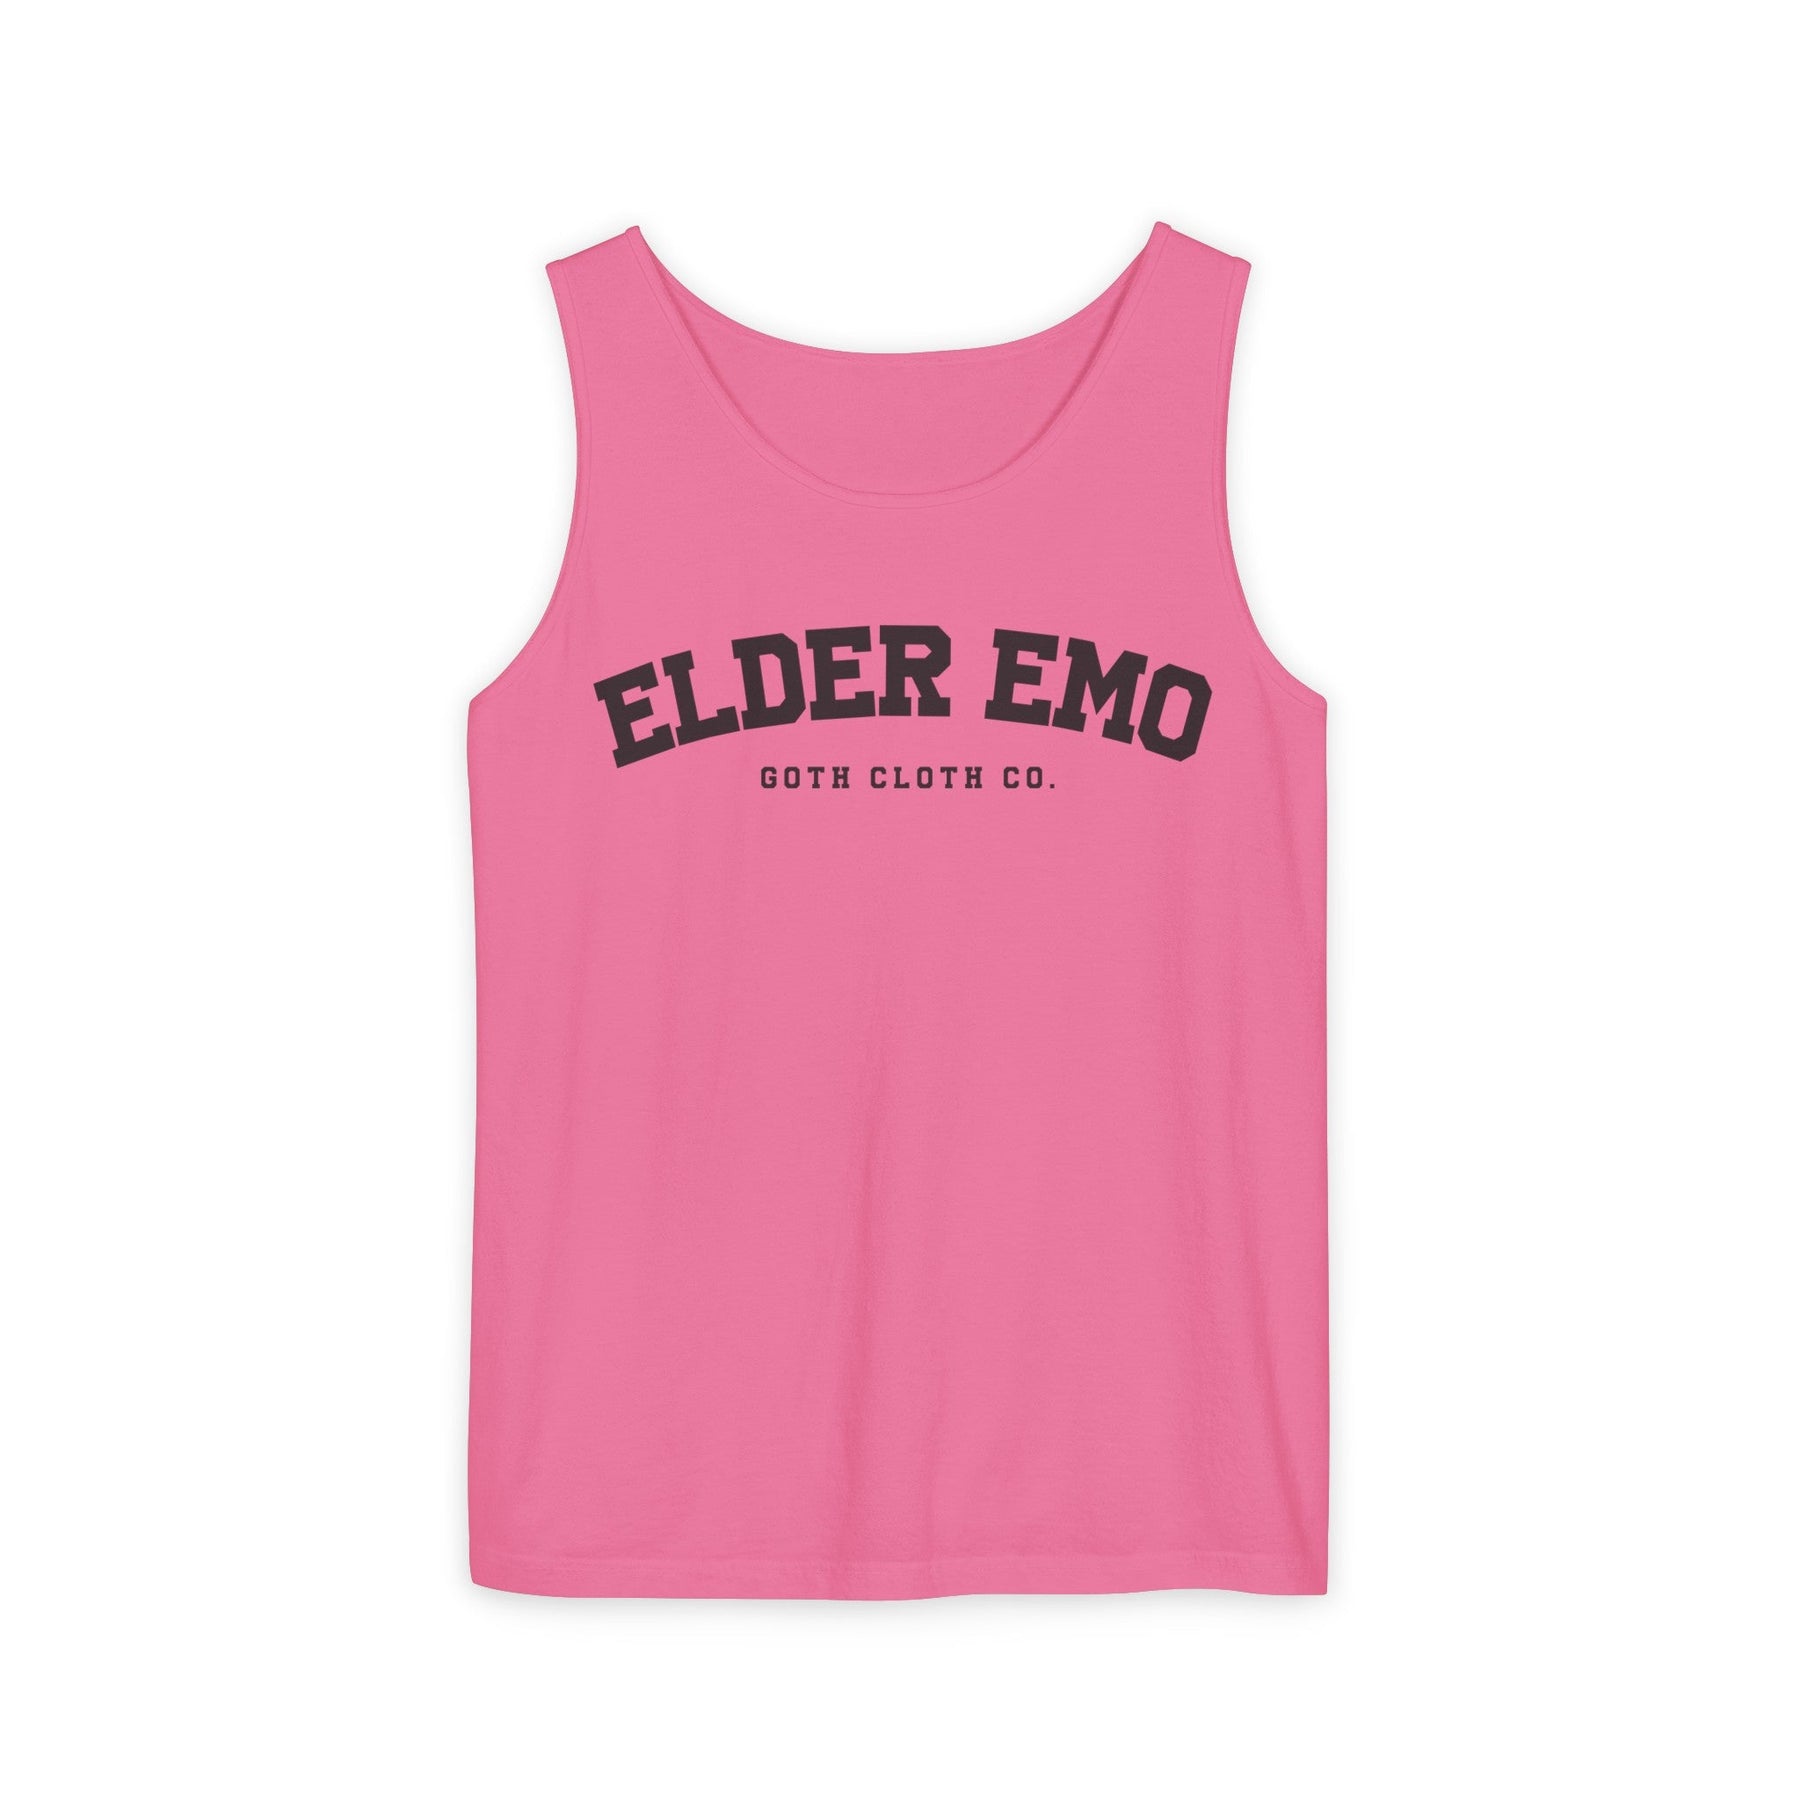 Elder Emo College Unisex Tank Top - Goth Cloth Co.Tank Top26477677948622345952